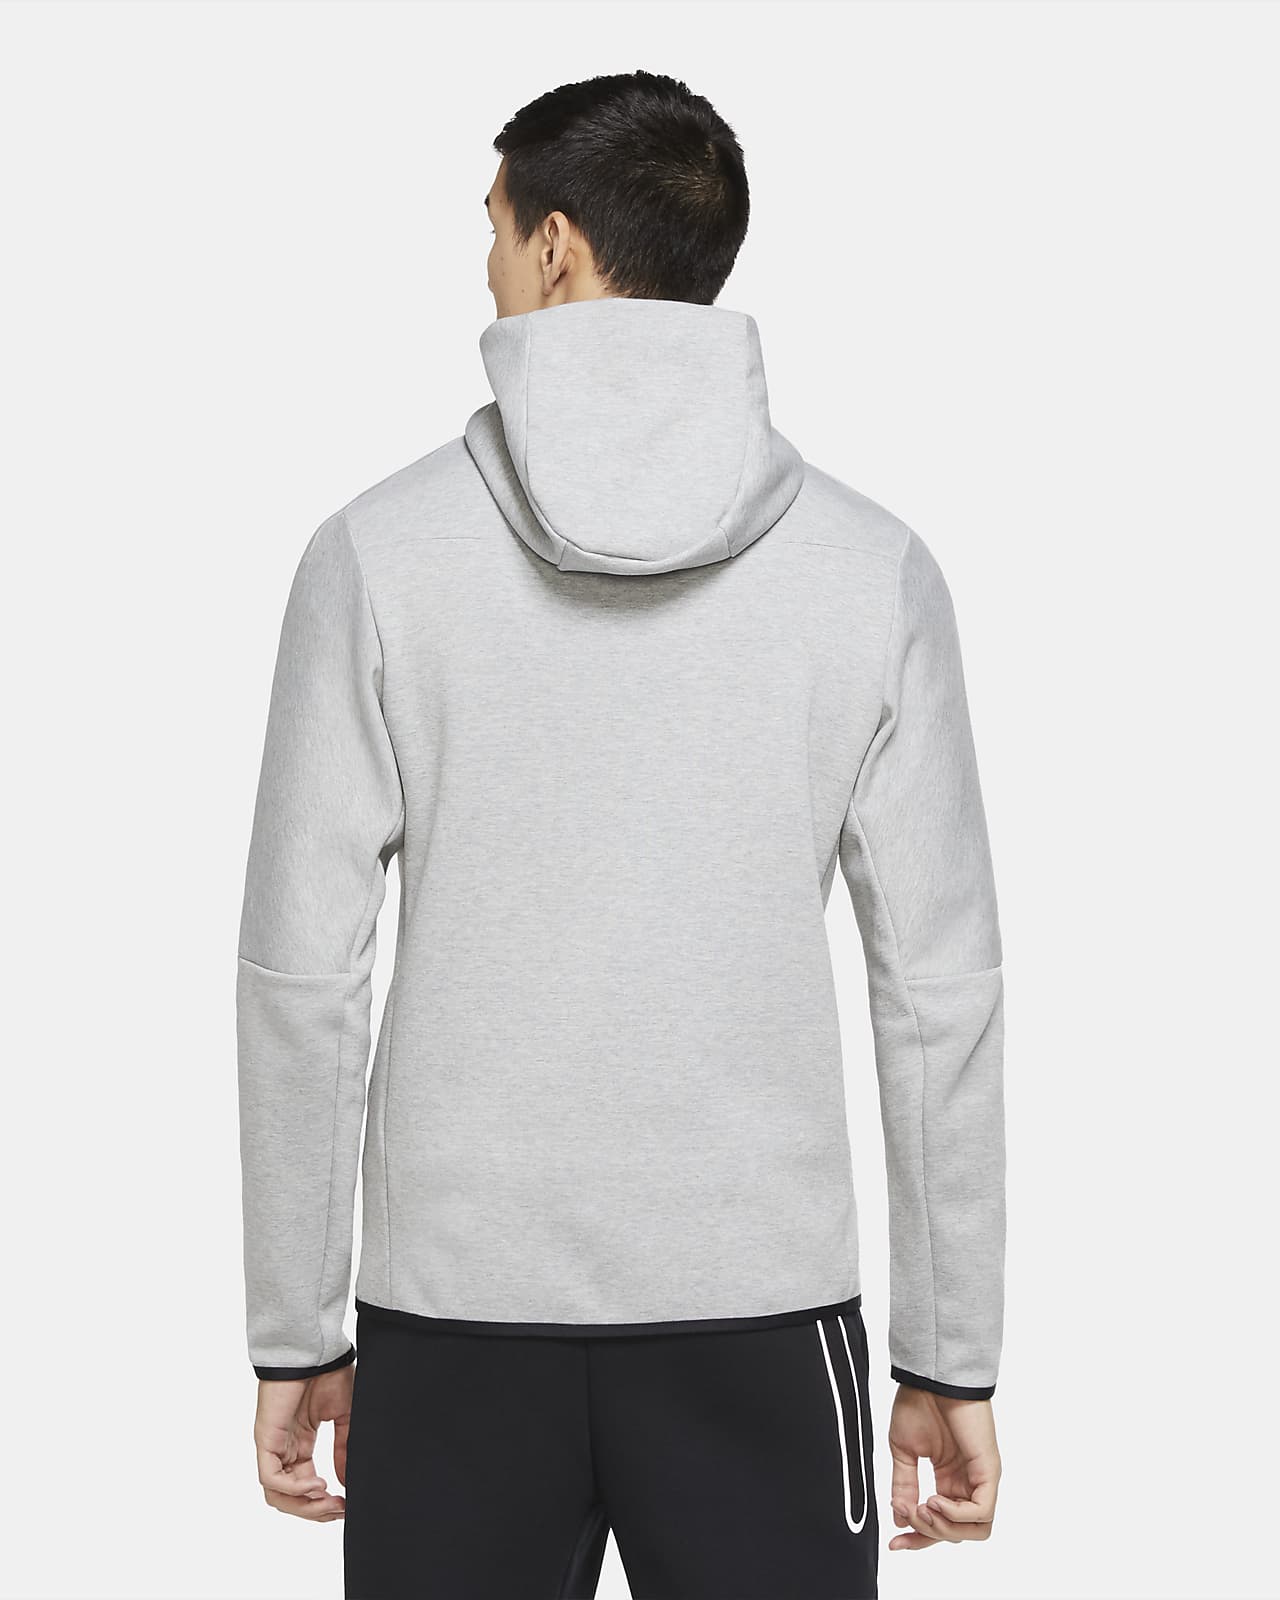 nike tech fleece hoodie size guide